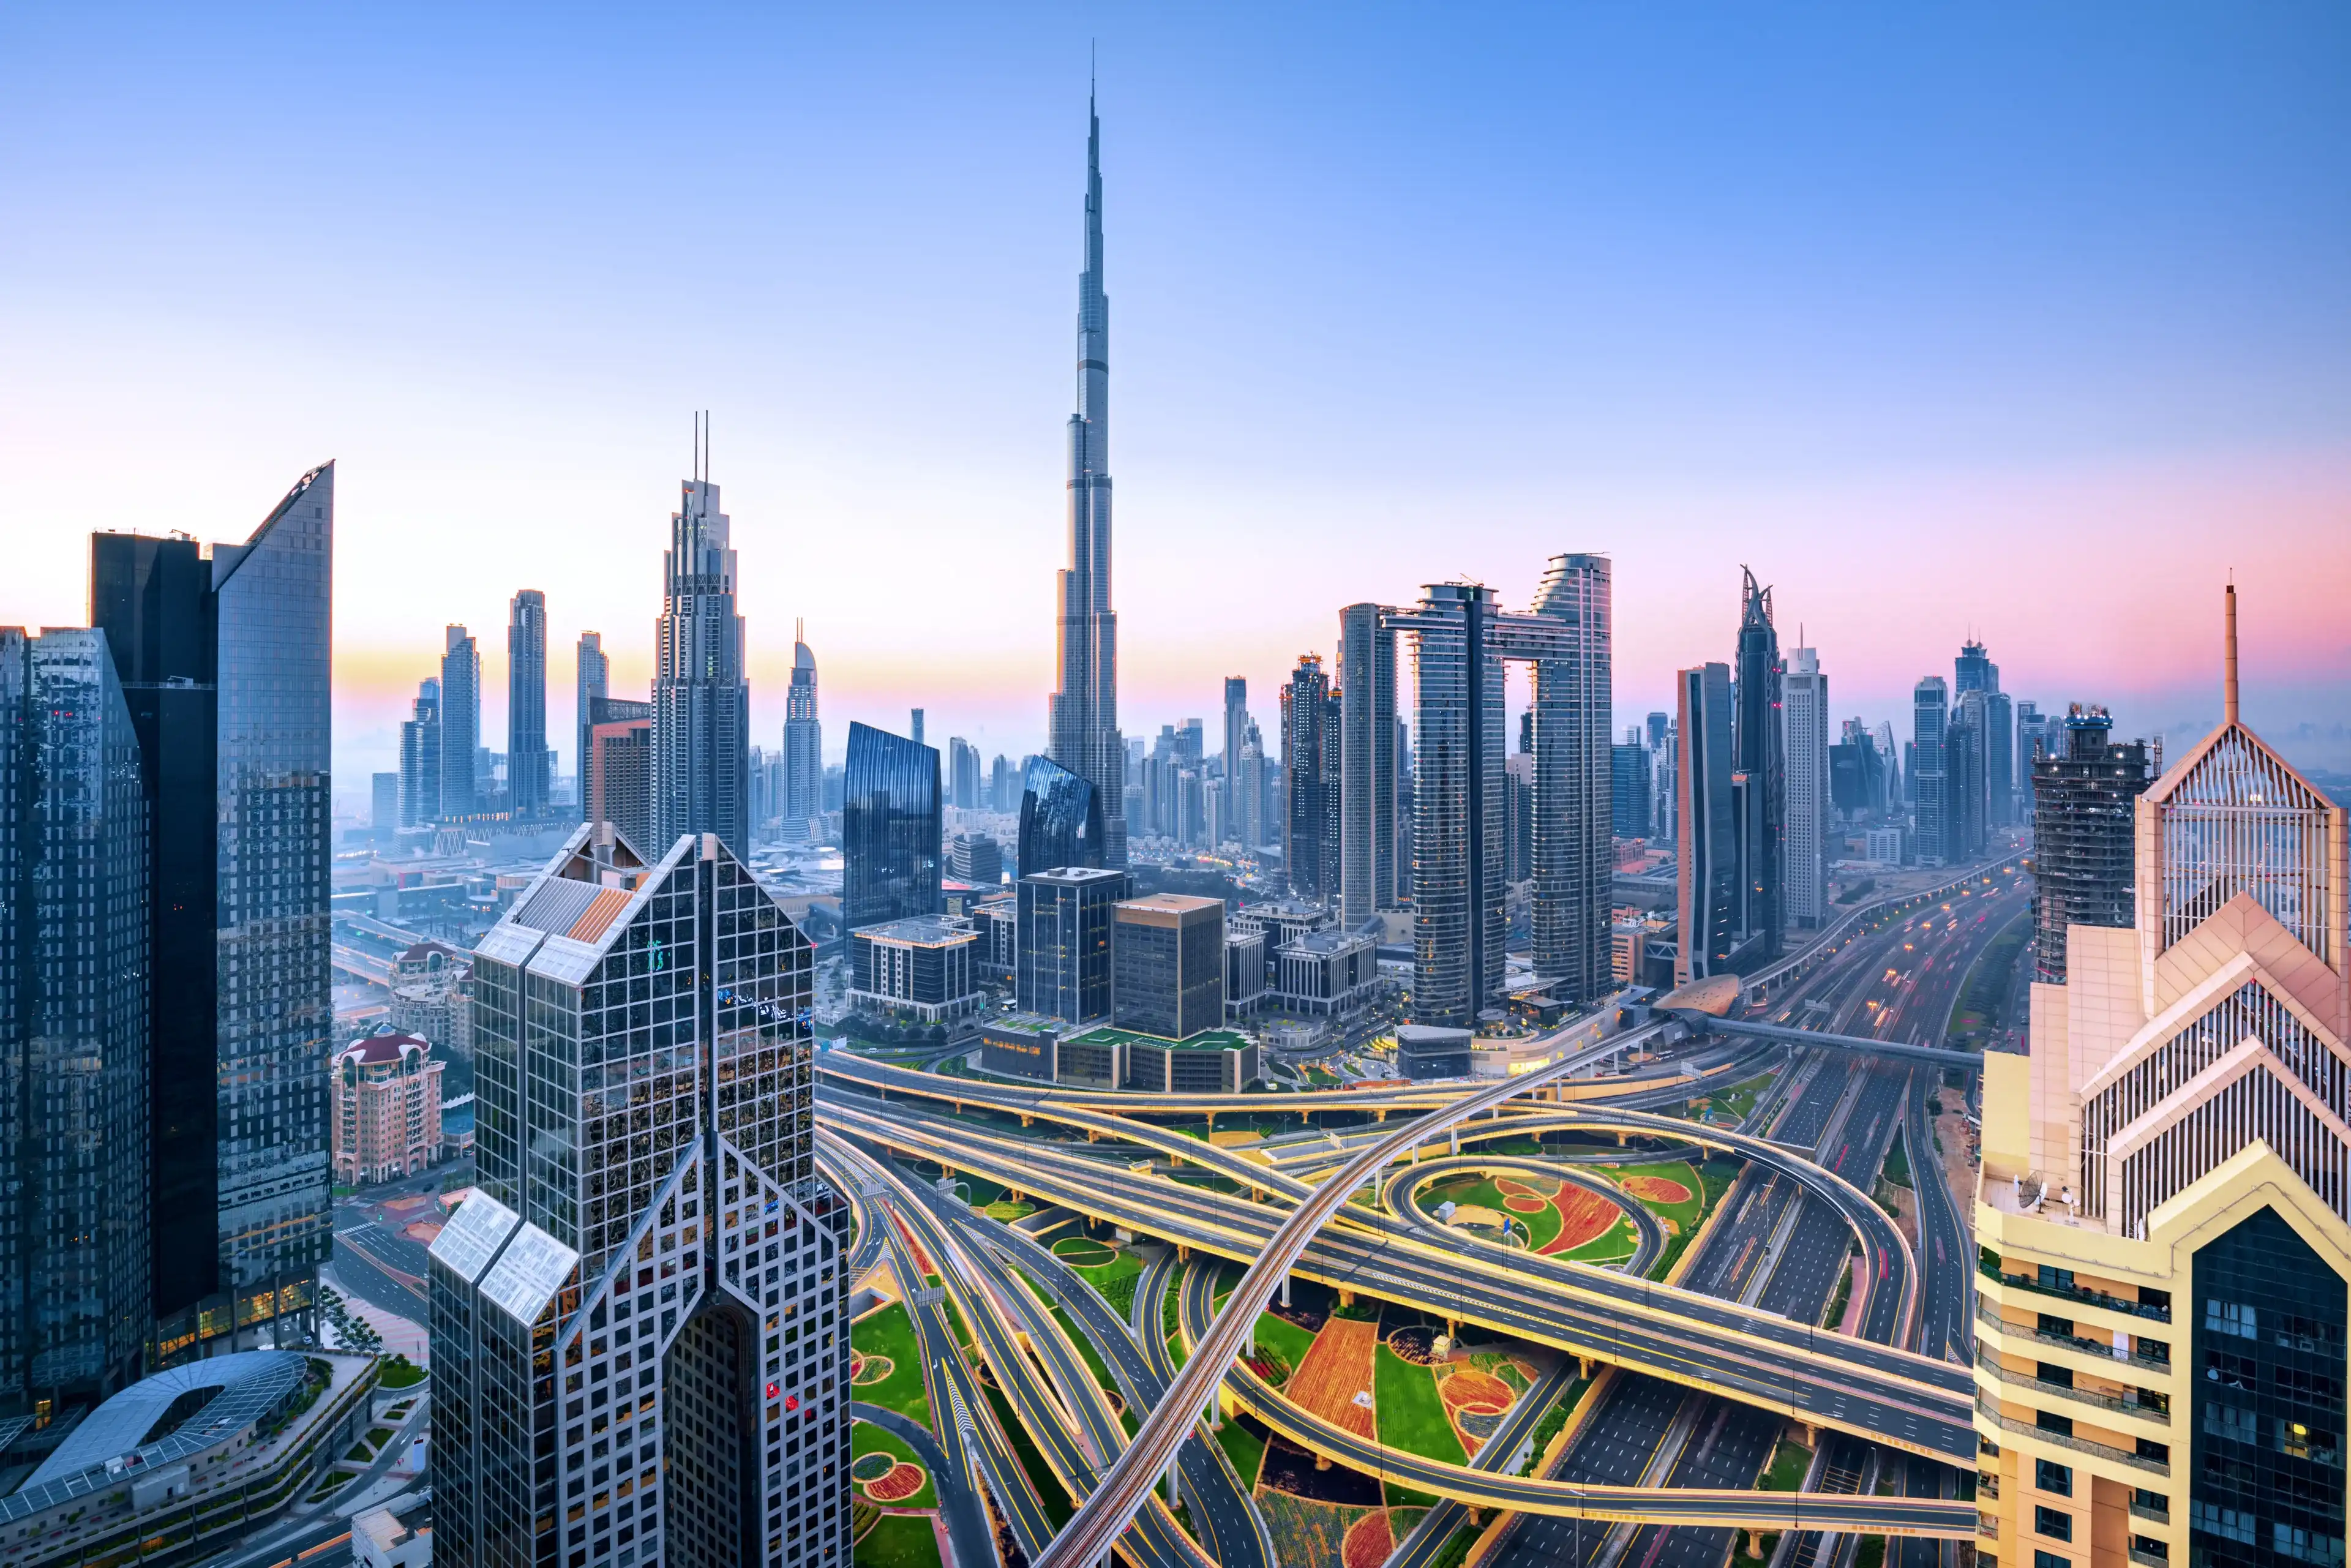 Dubai - amazing city center skyline with luxury skyscrapers, United Arab Emirates